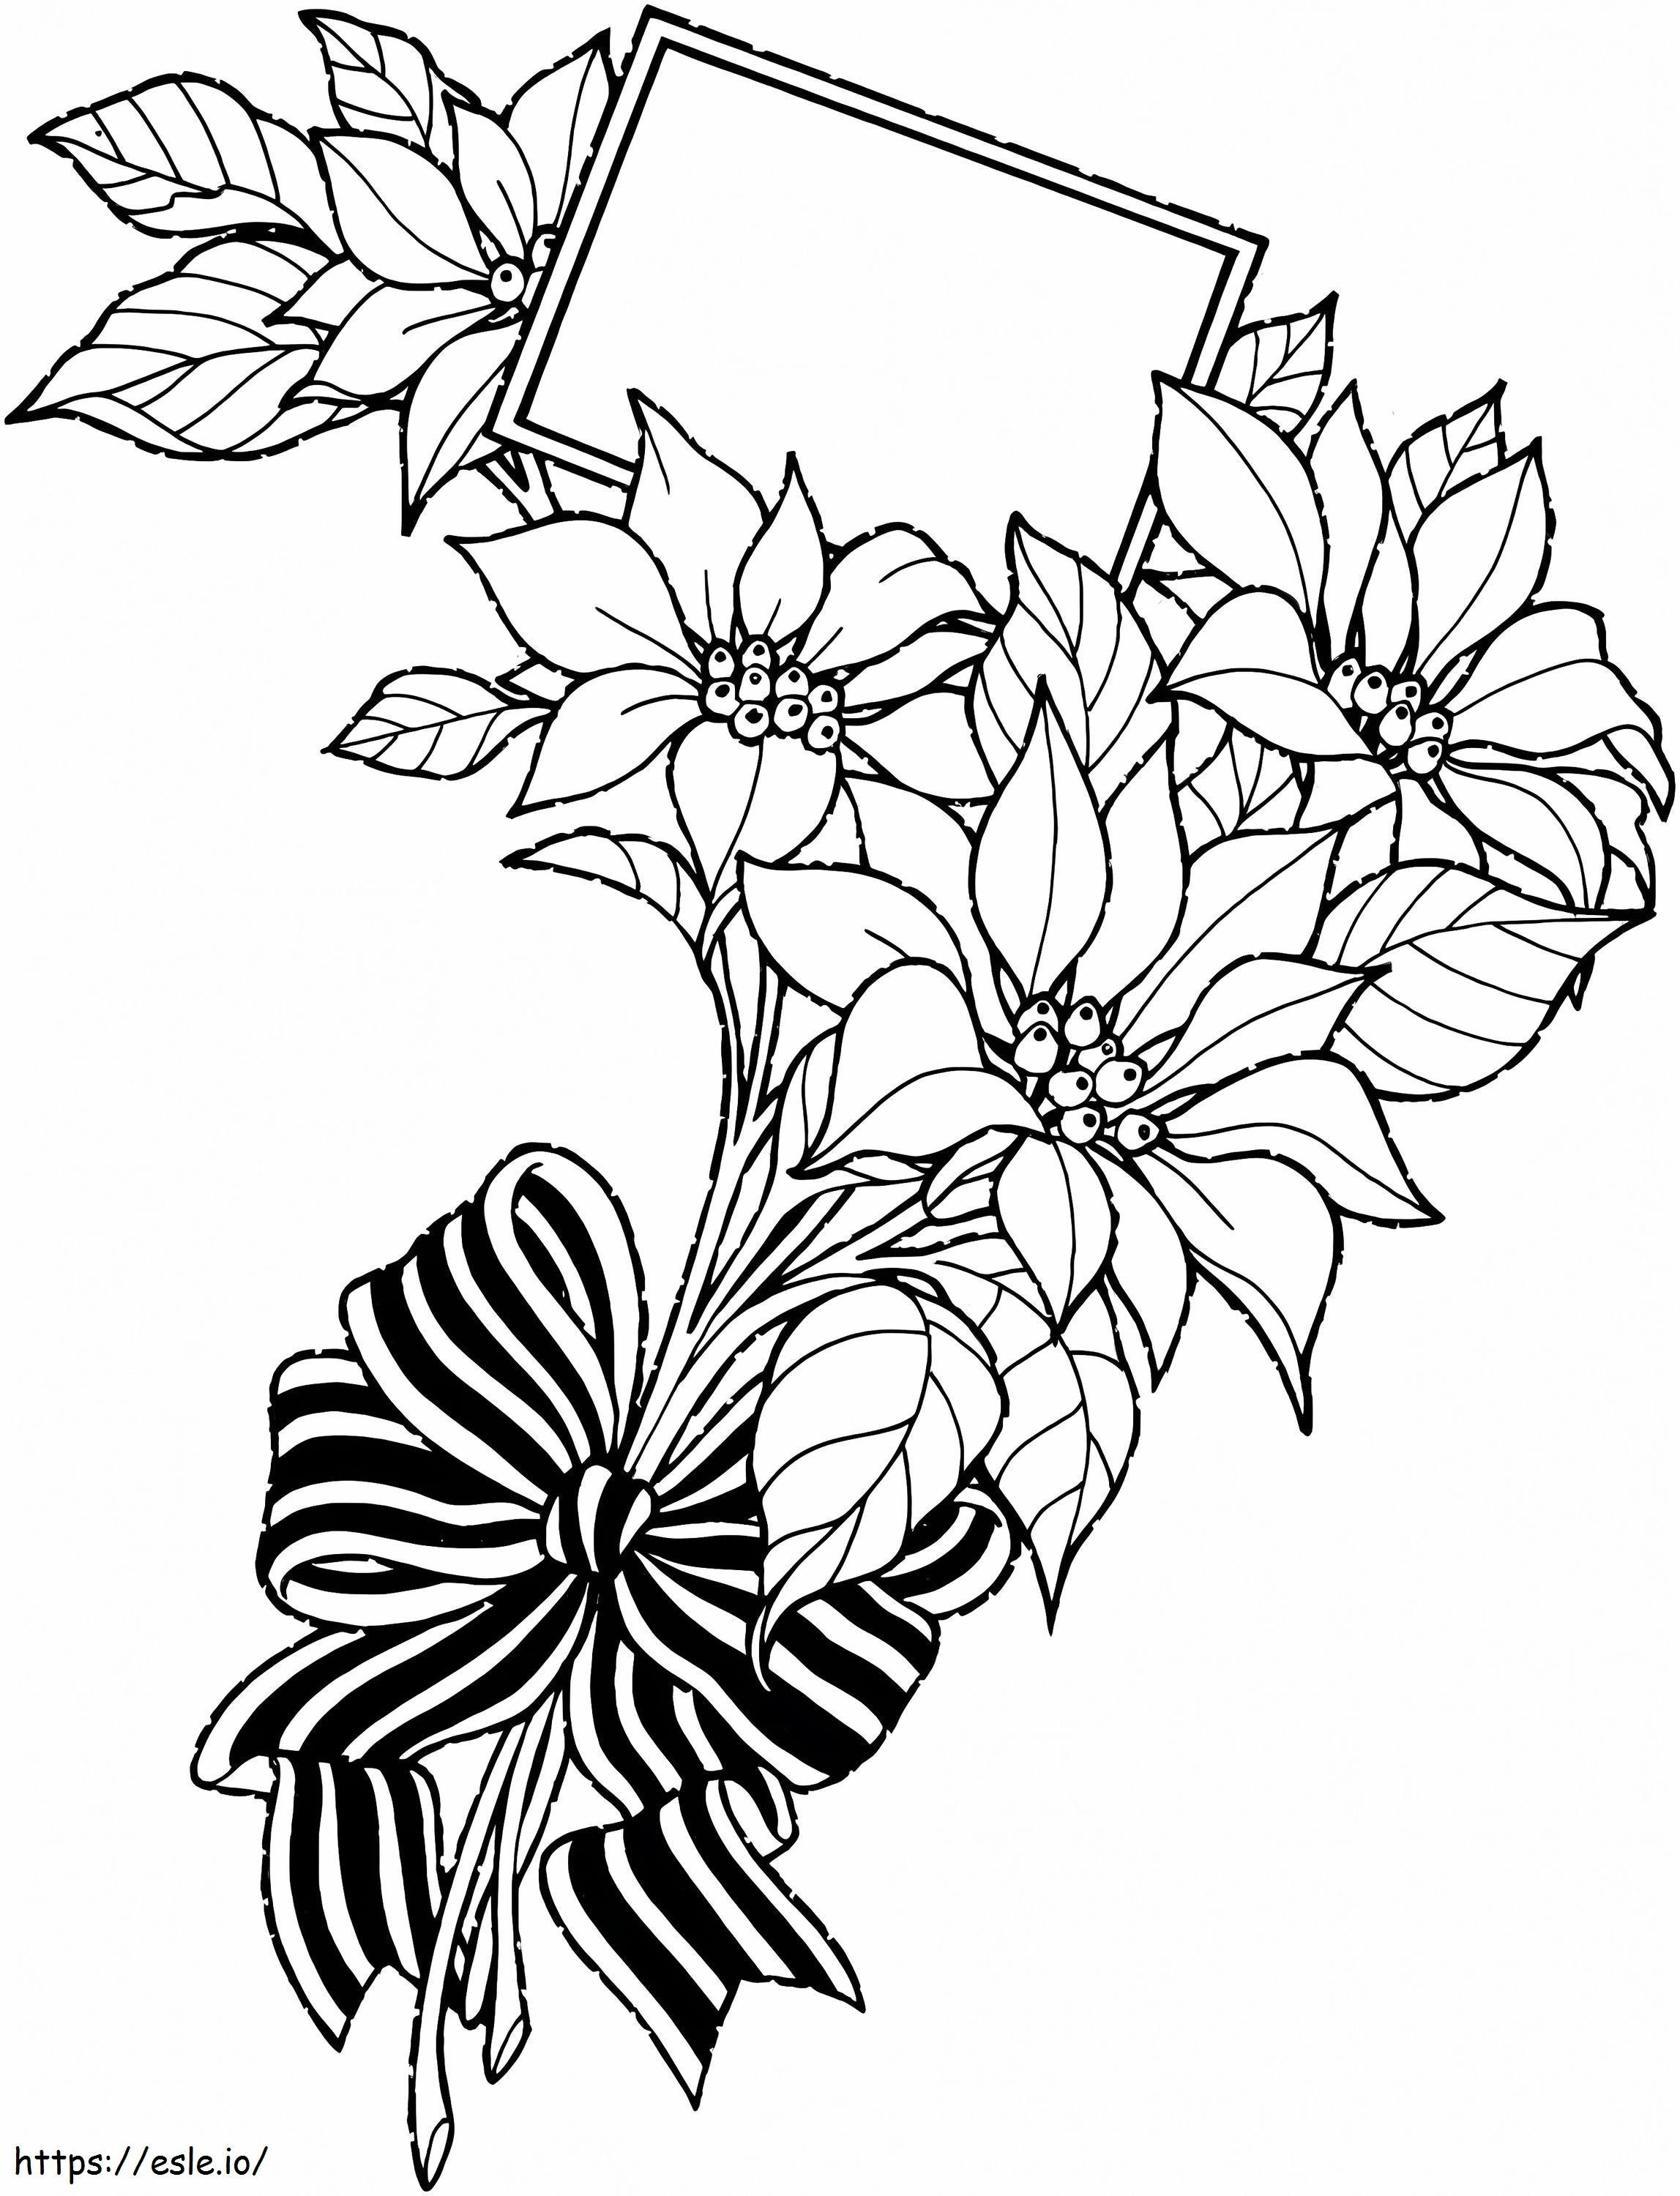 Buchet de Poinsettia de Crăciun de colorat